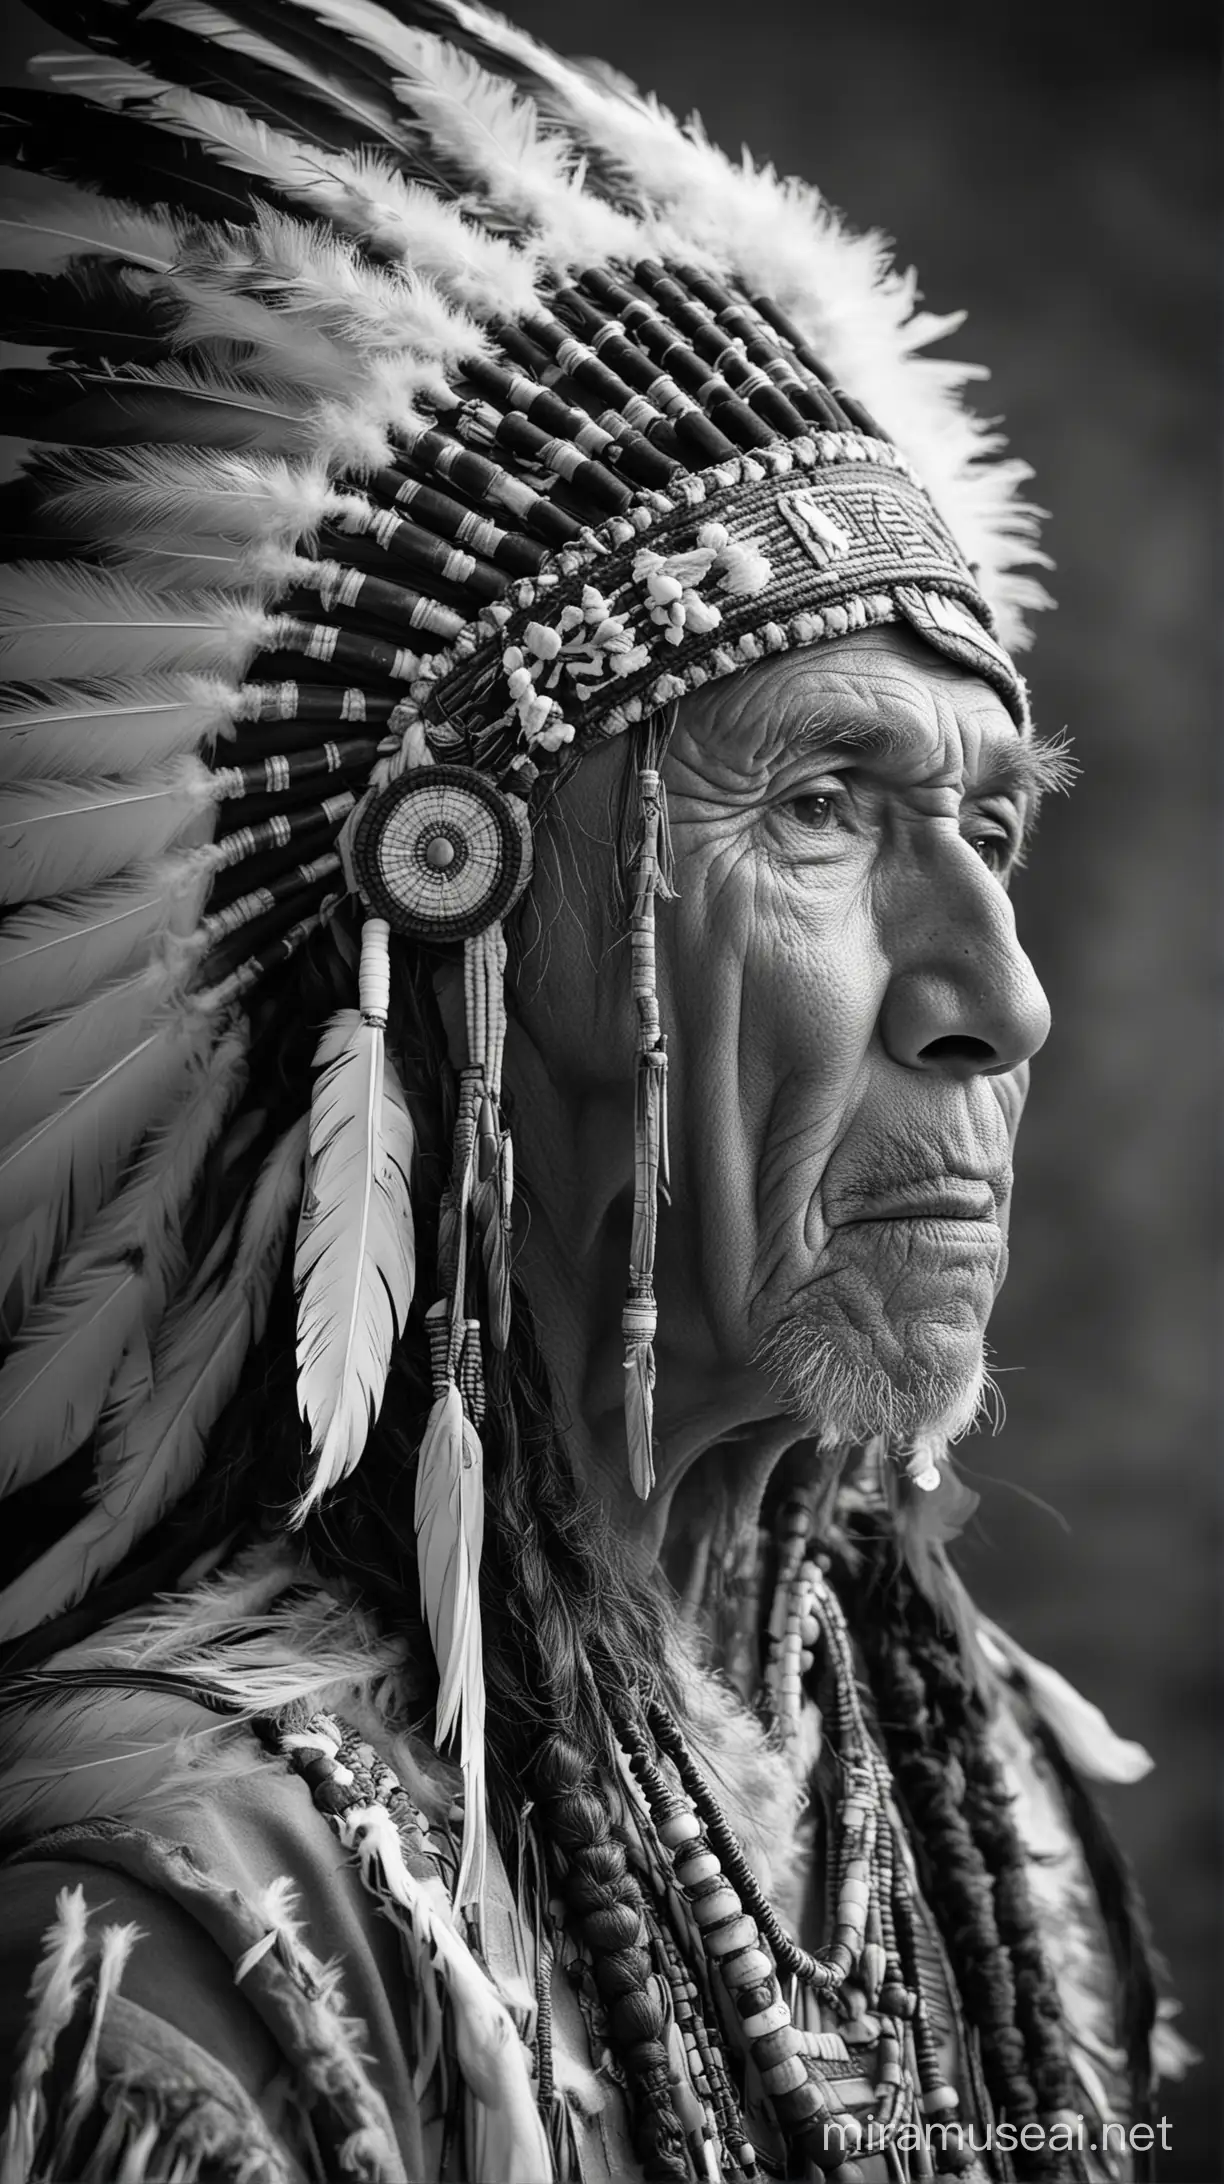 Native American chief, elder, headdress ,black and white, side view, Nikon z9, f8 aperture, 1/125 shutter speed, sharp focus, iso 100 stylize 750